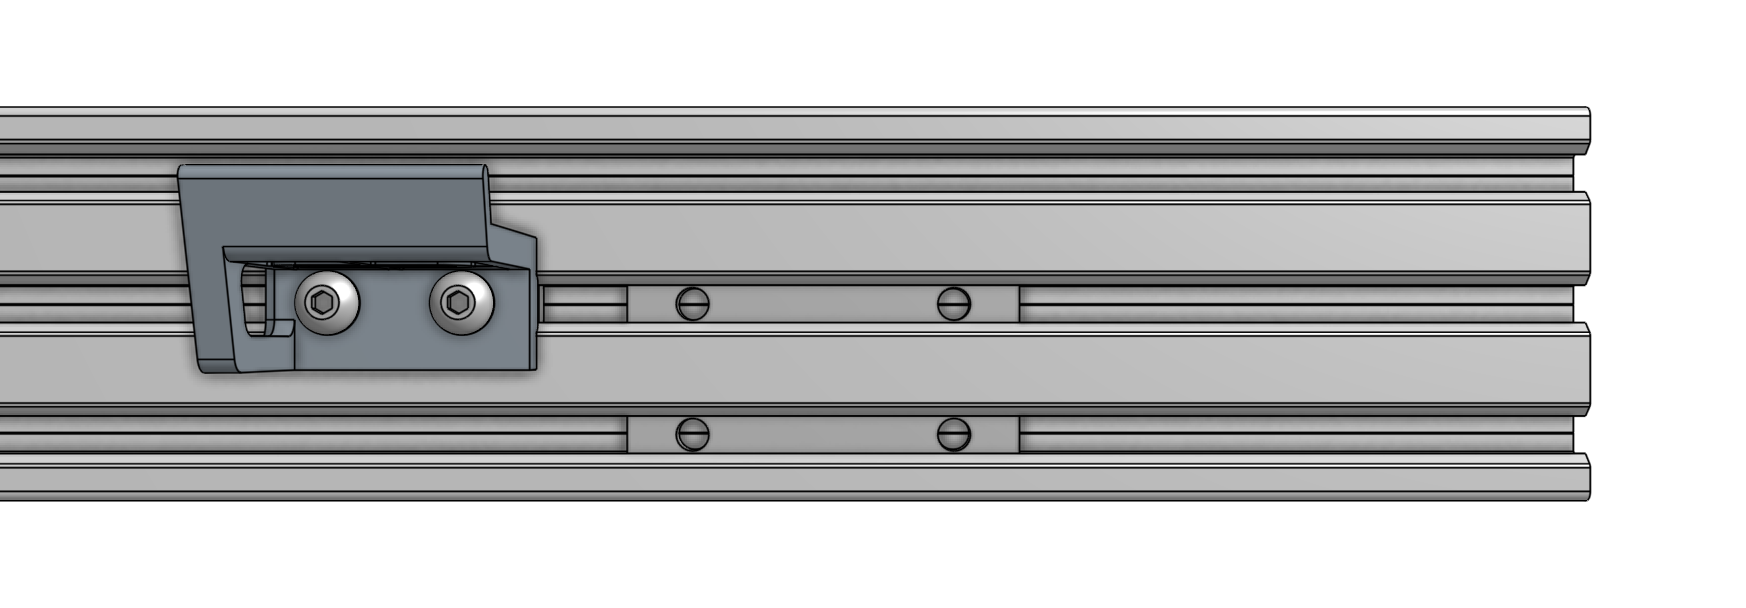 gantry column main beam nut bars